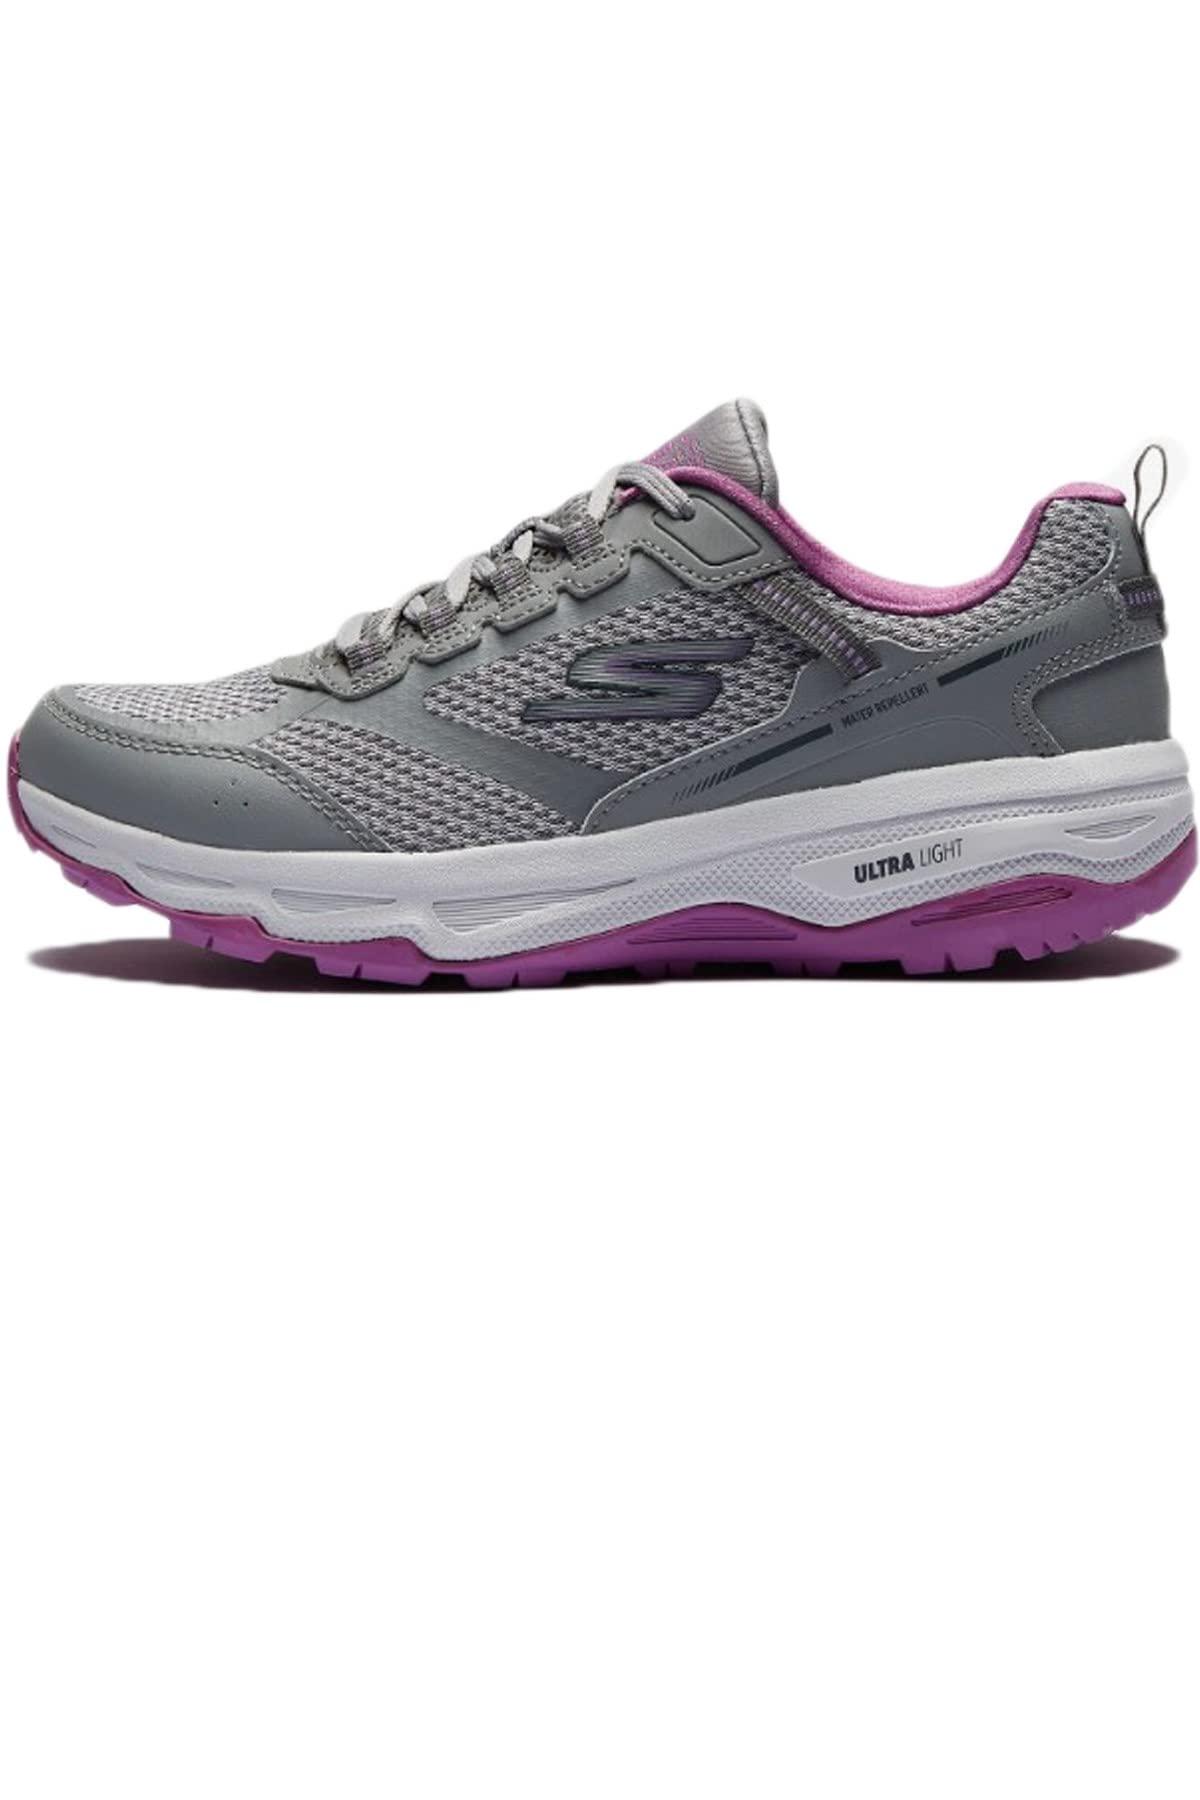 Skechers Go Run Trail Altitude Gray/purple 6.5 B | Lyst